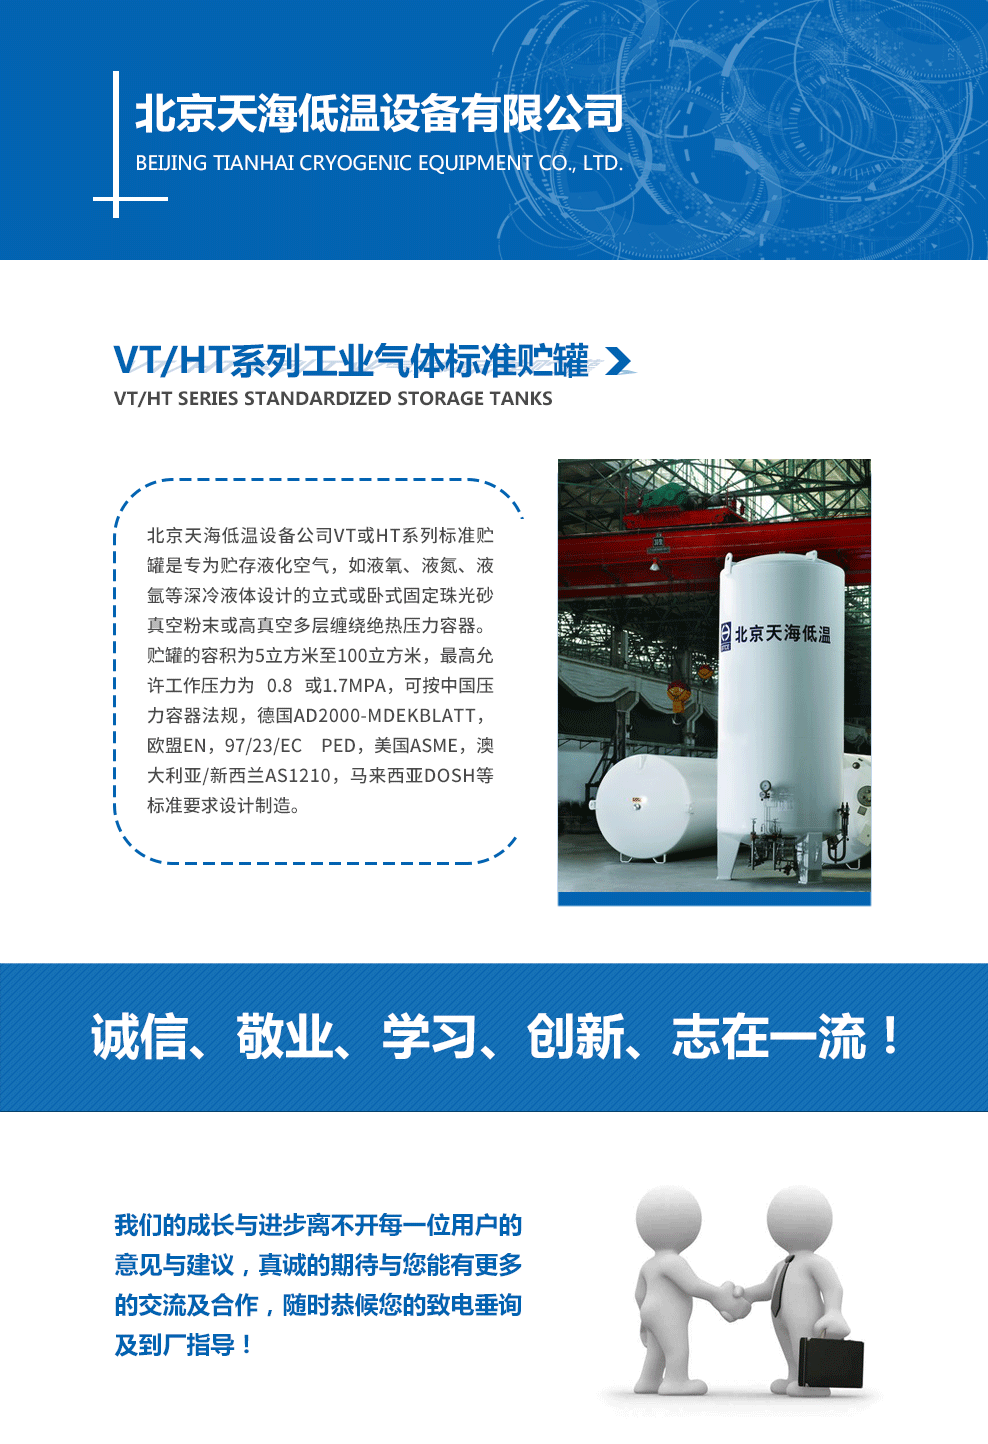 6-VT-HT系列工业气体标准贮罐.png